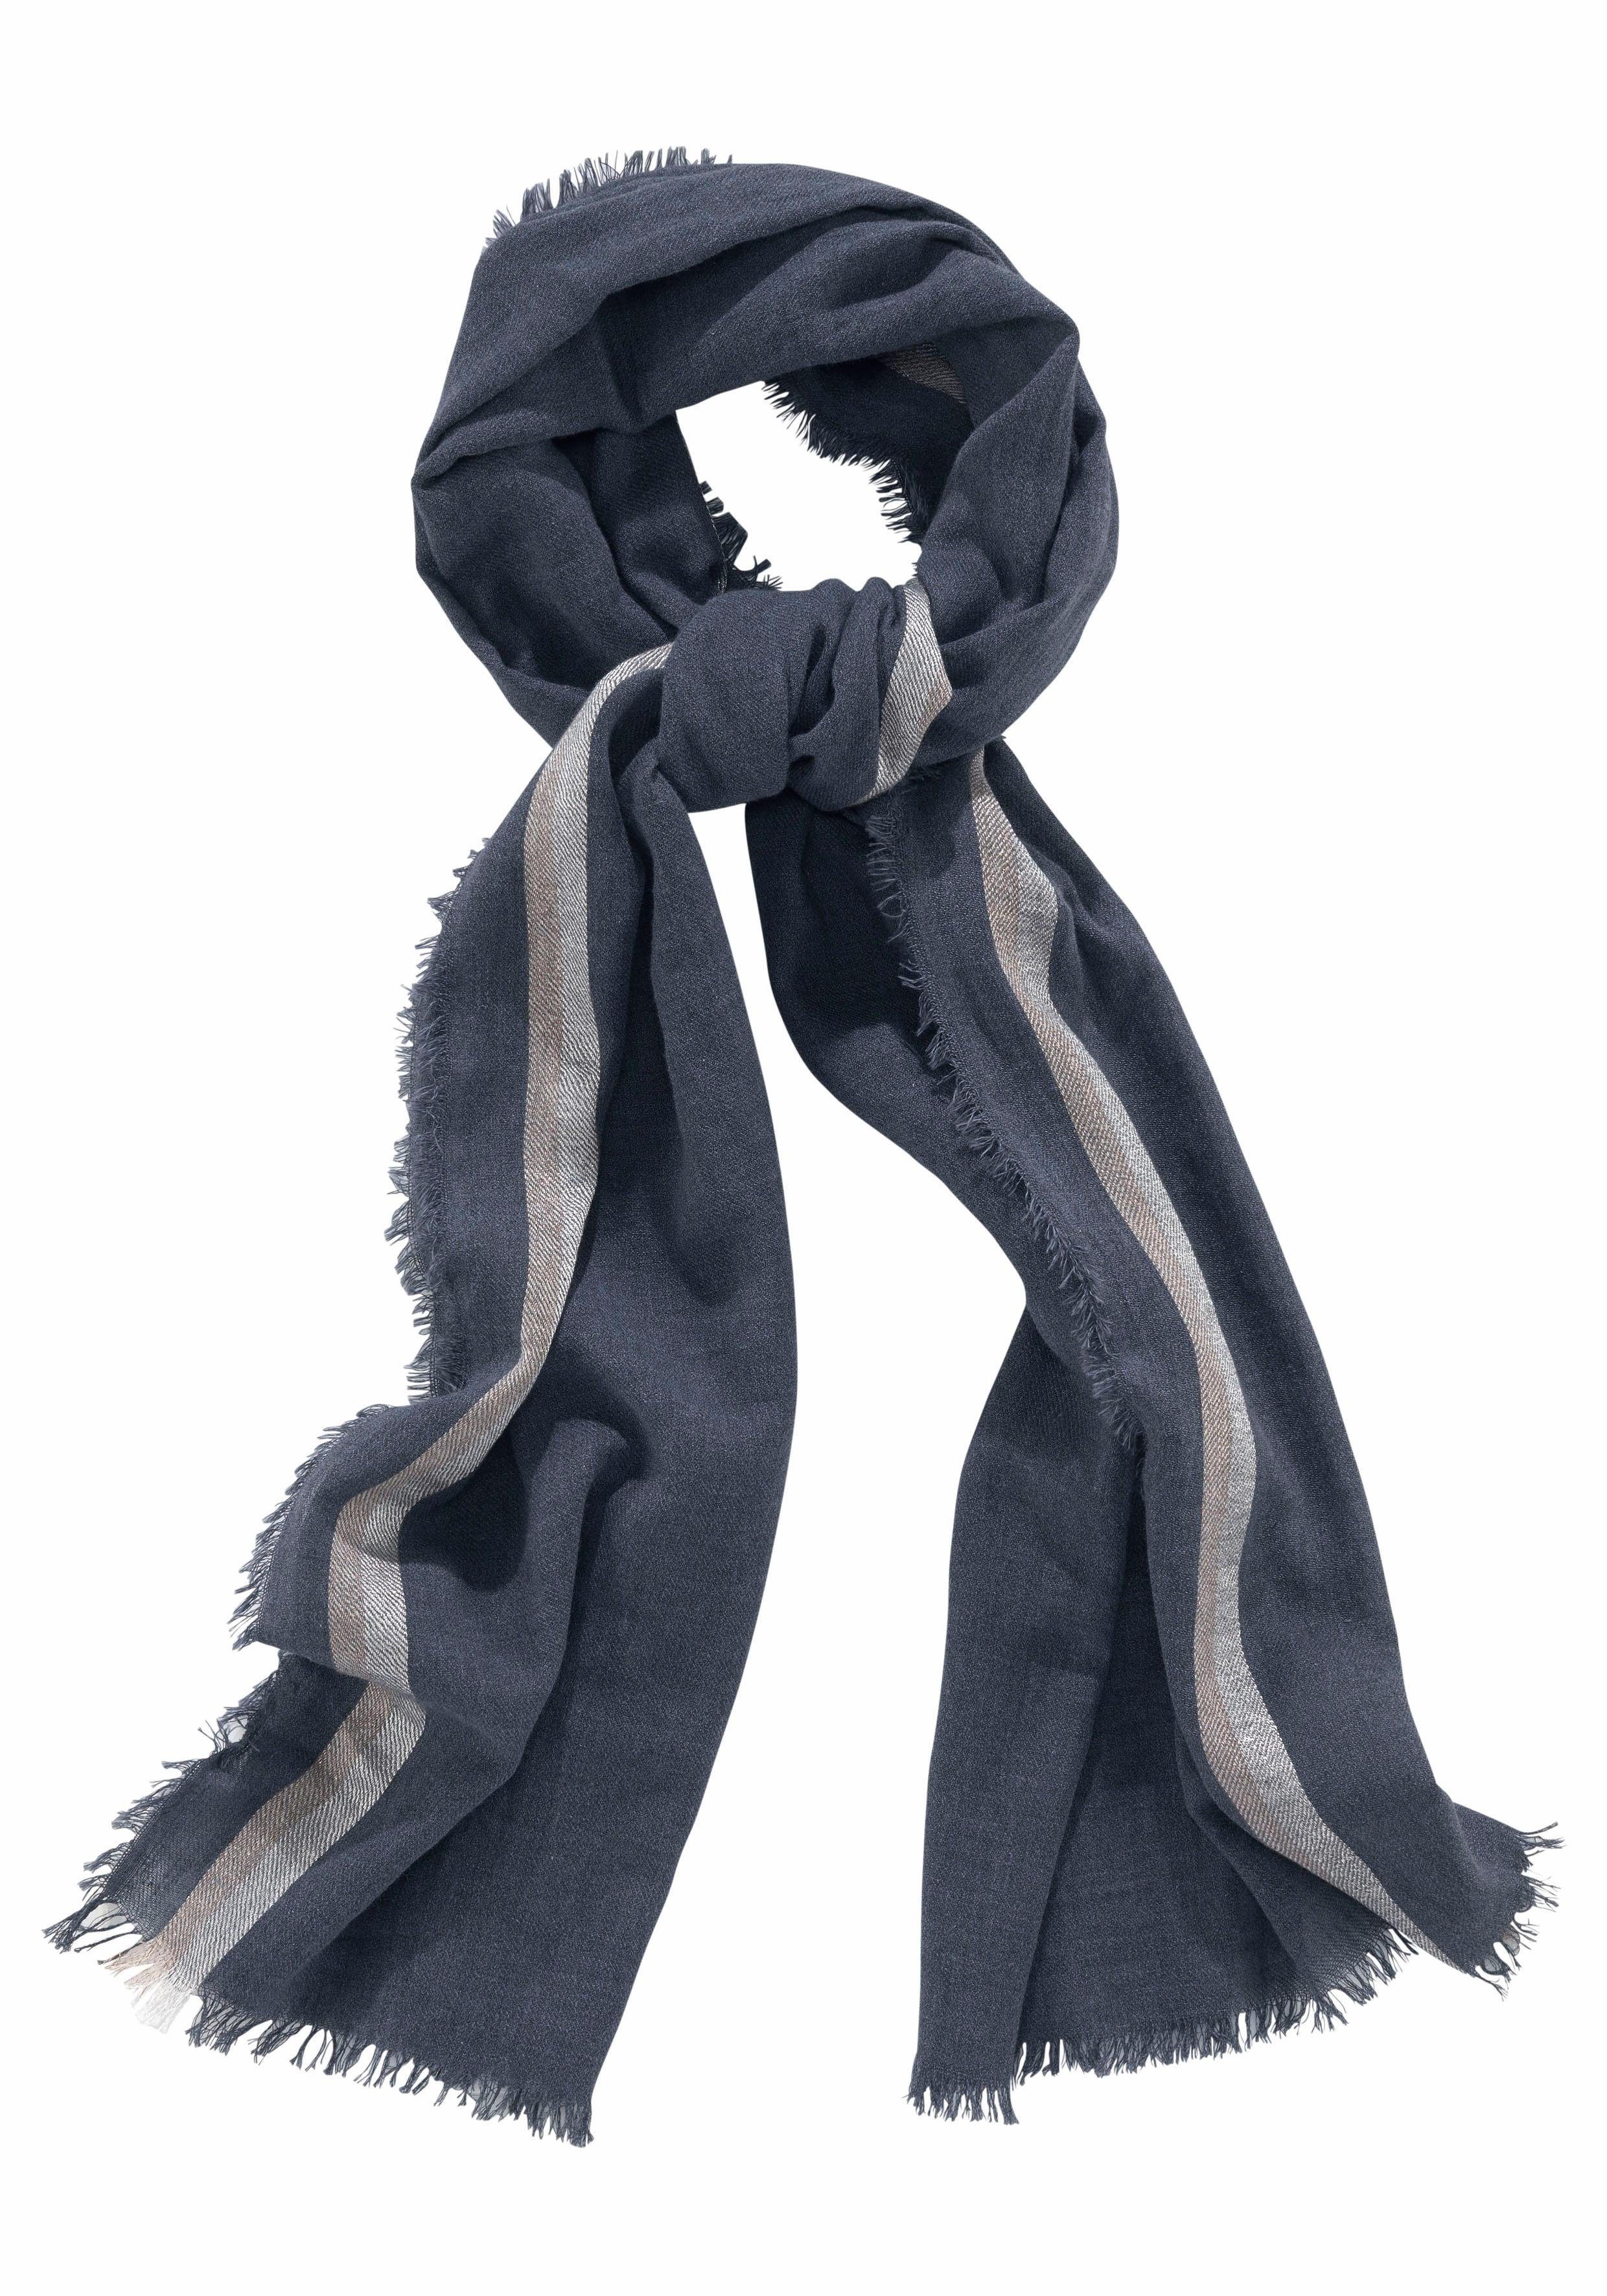 ESPRIT NU 15% KORTING: Esprit modieuze sjaal